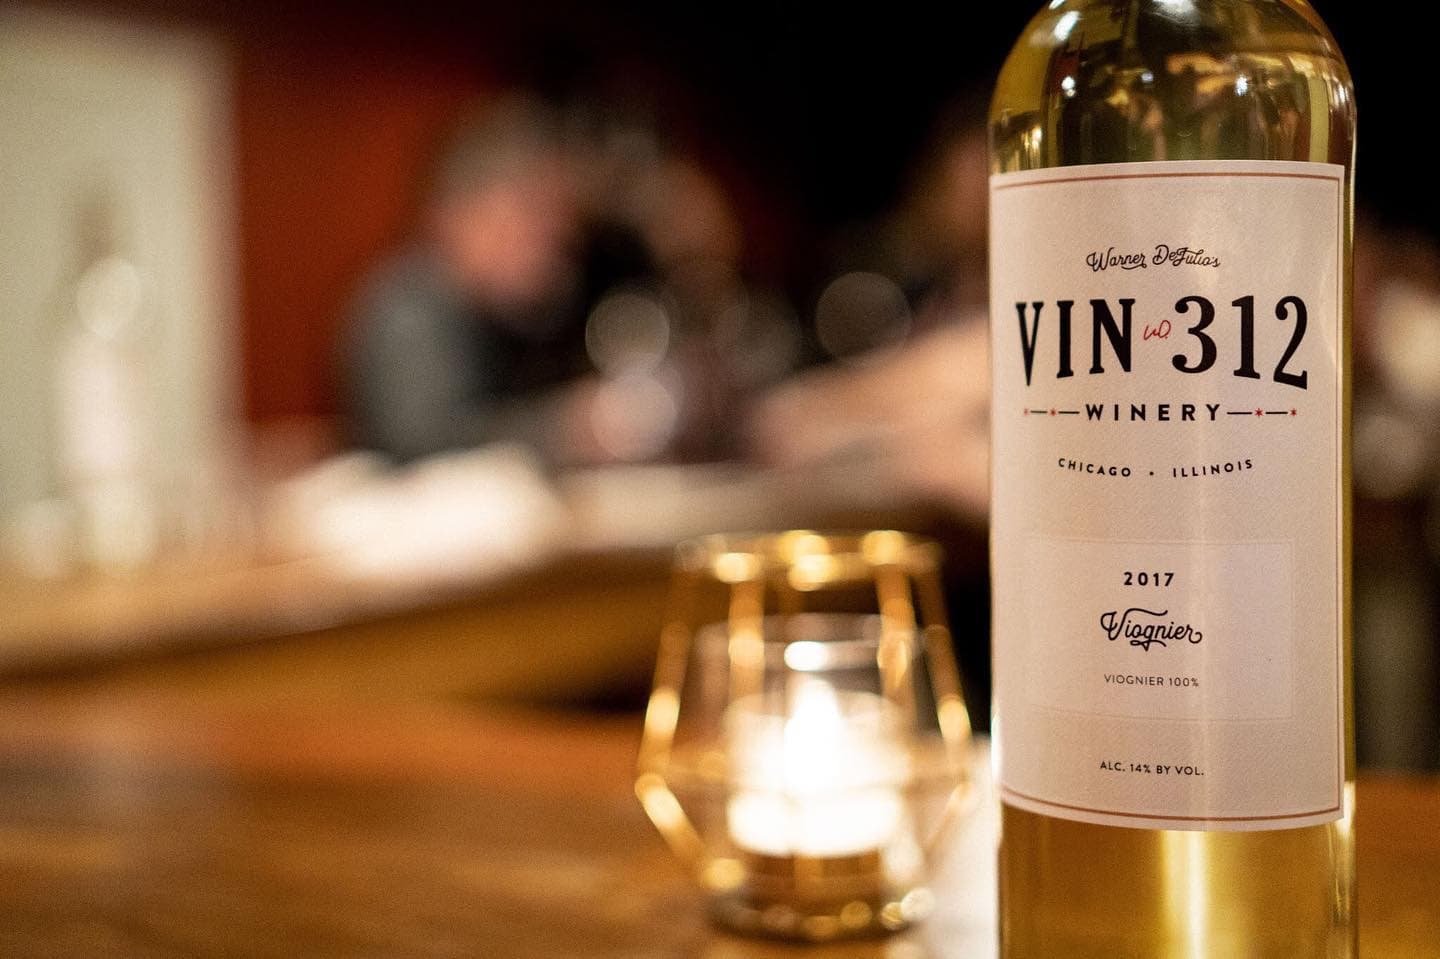 Vin312 Winery